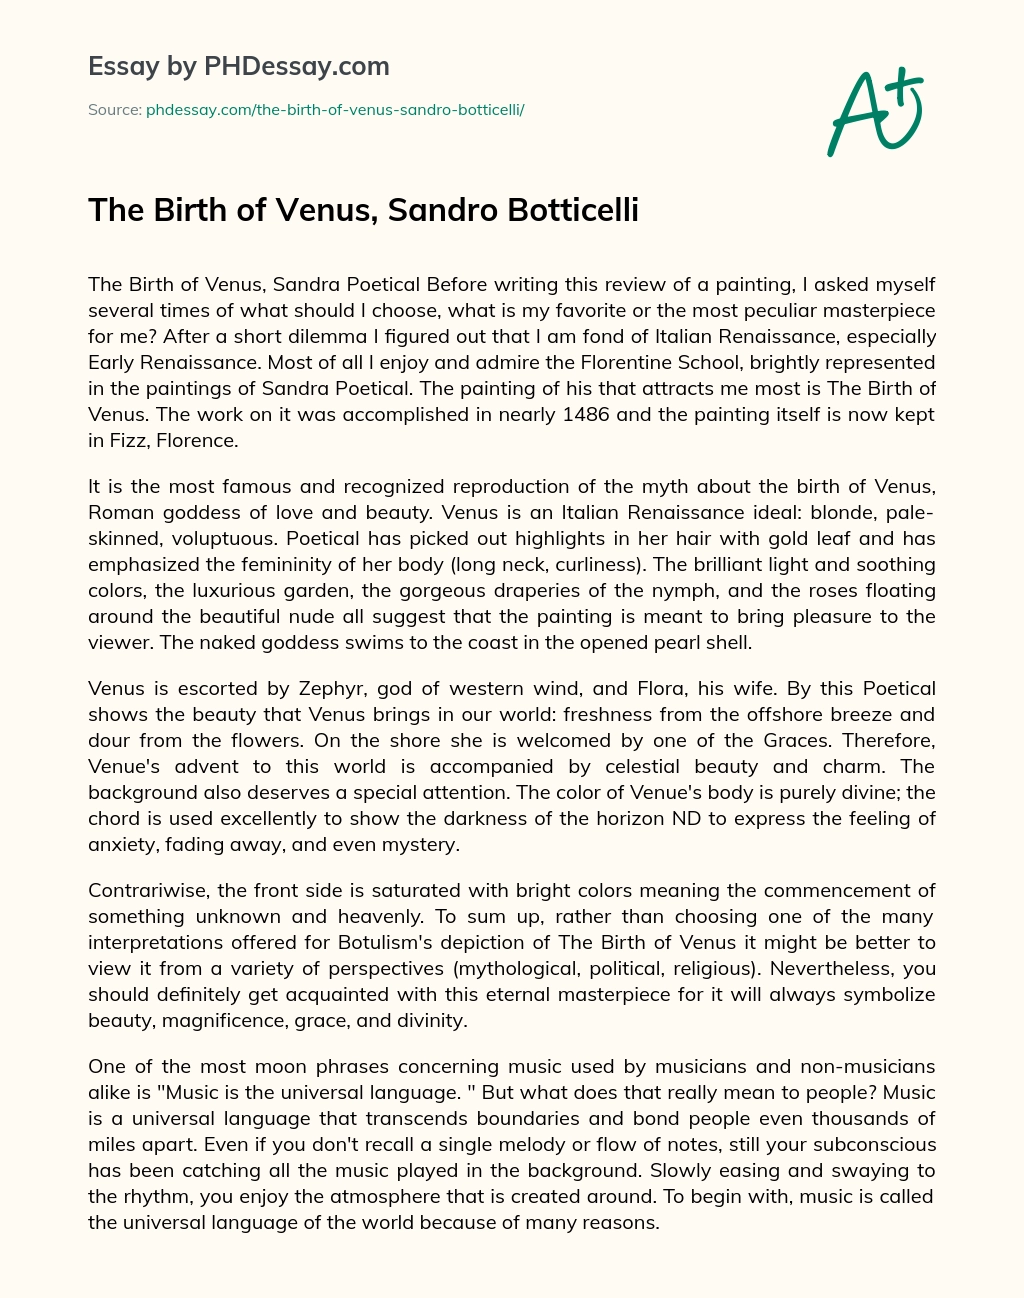 The Birth of Venus, Sandro Botticelli essay